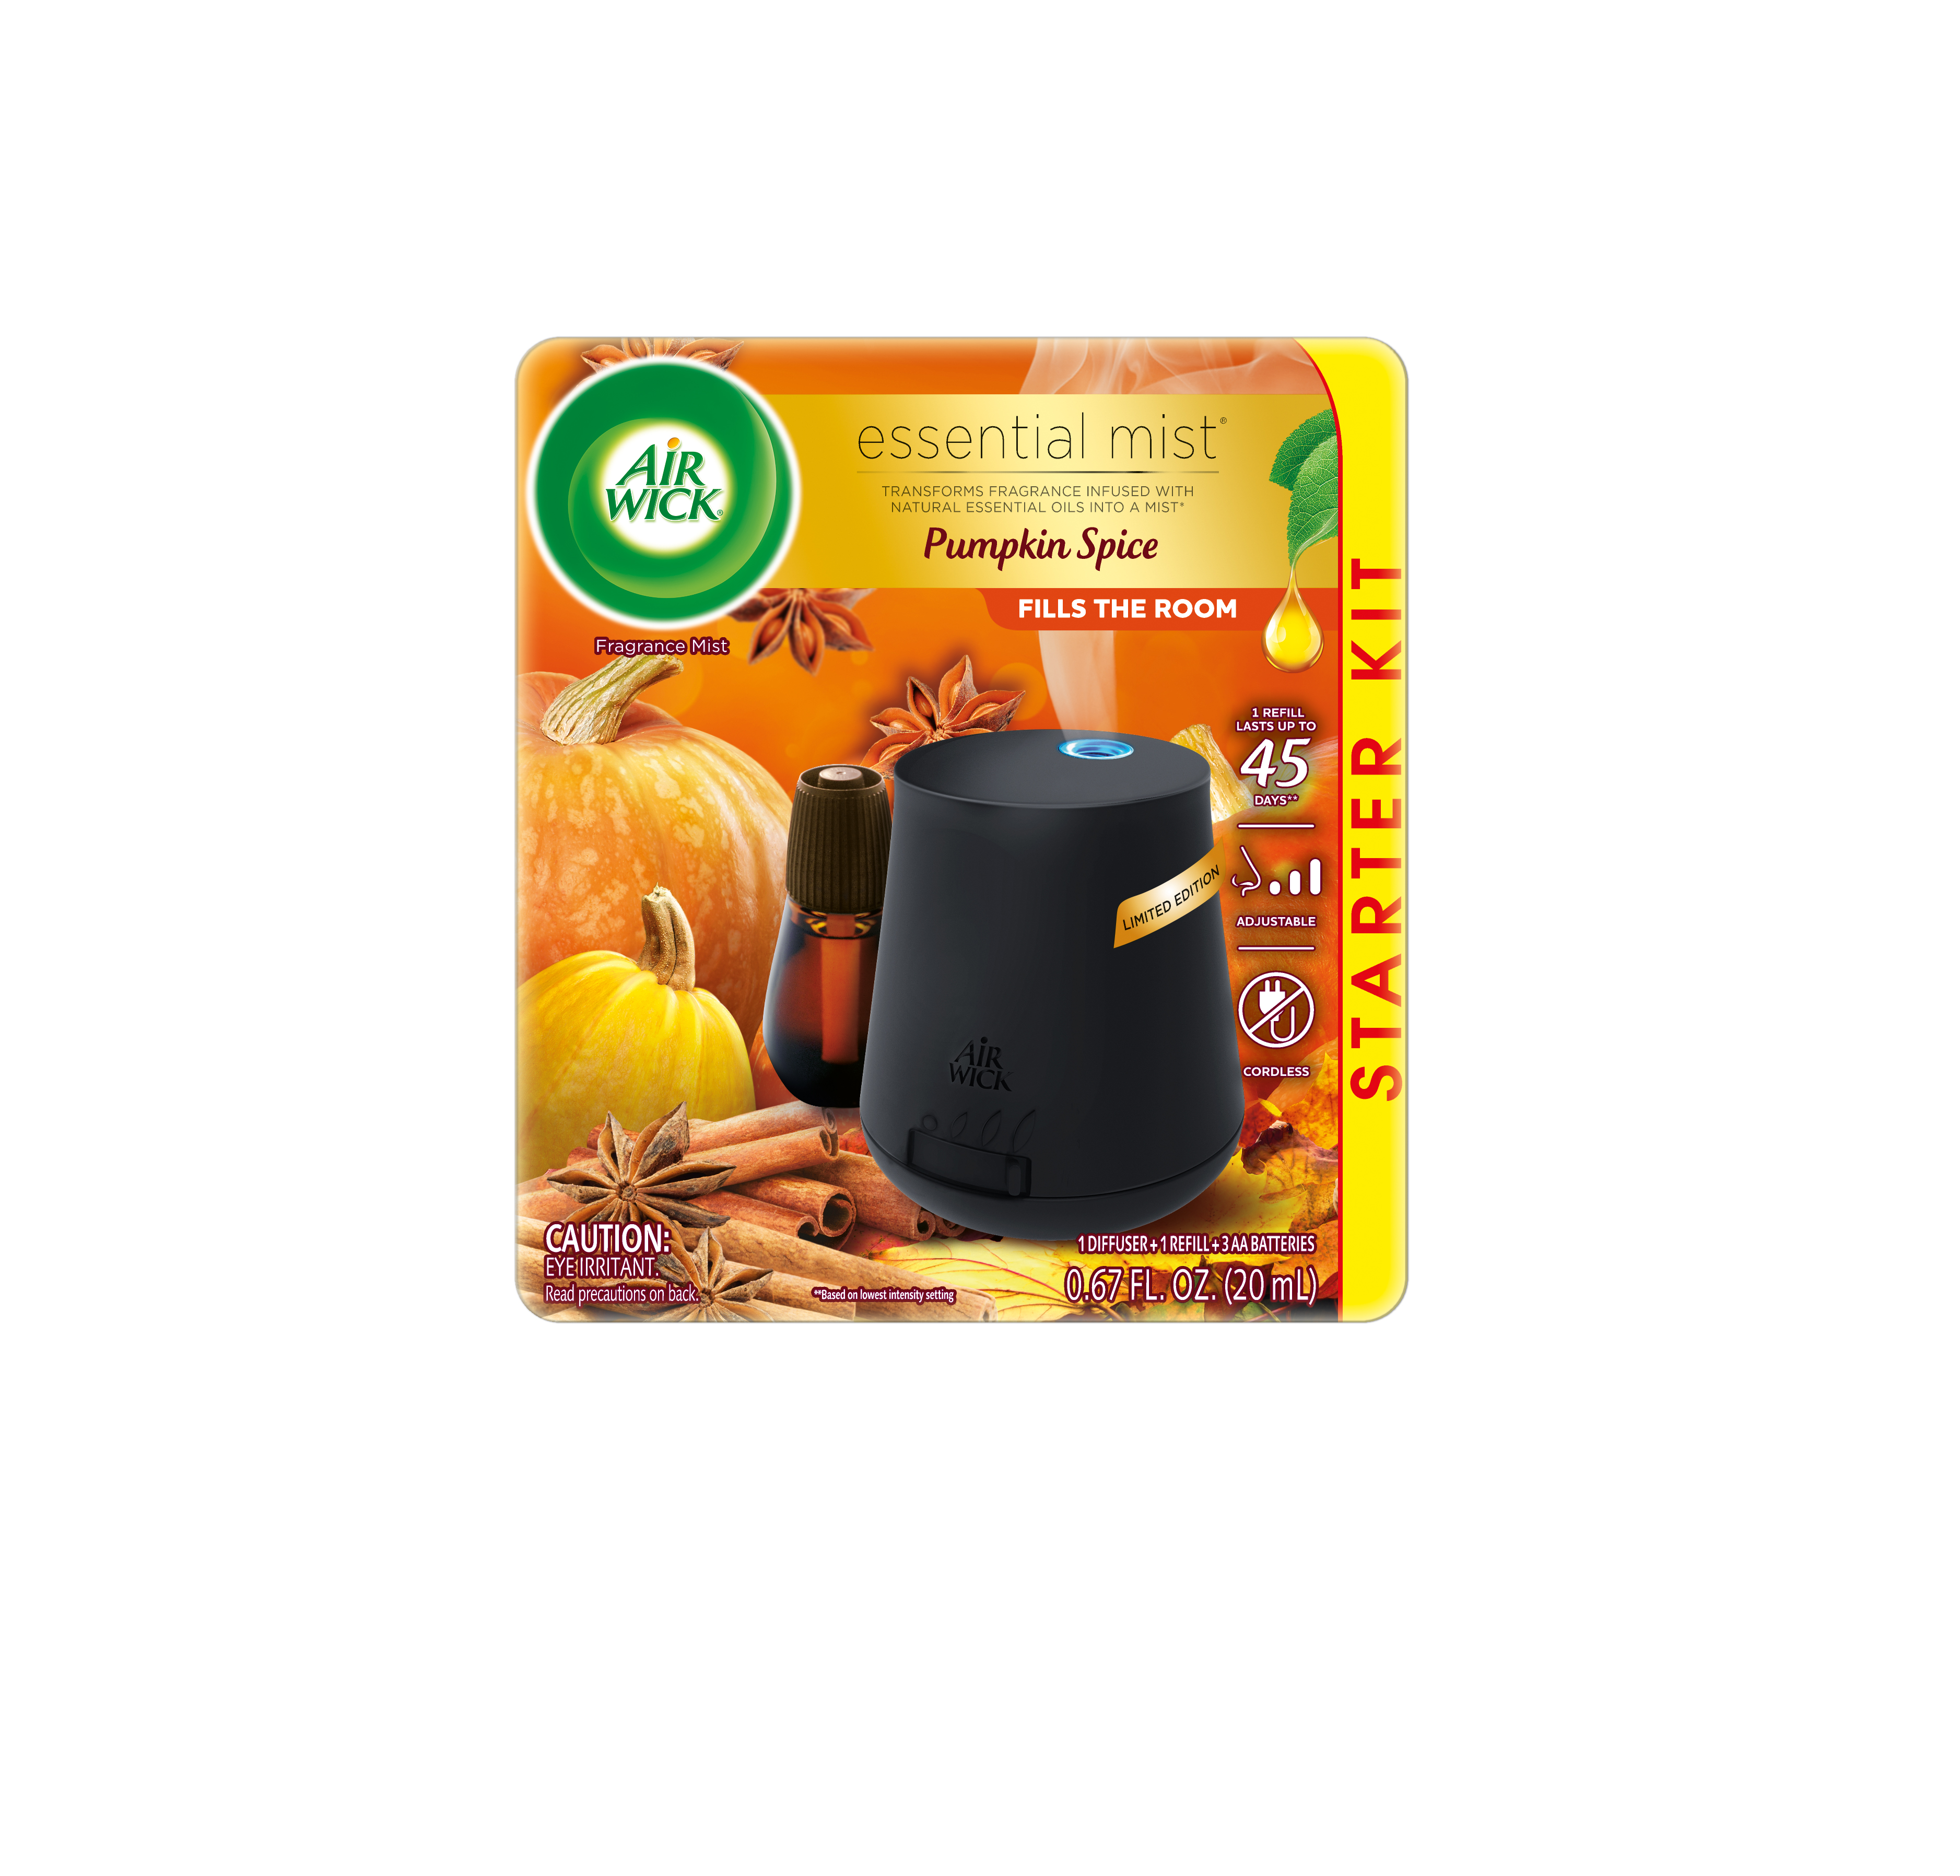 AIR WICK® Essential Mist - Pumpkin Spice - Kit (Discontinued)